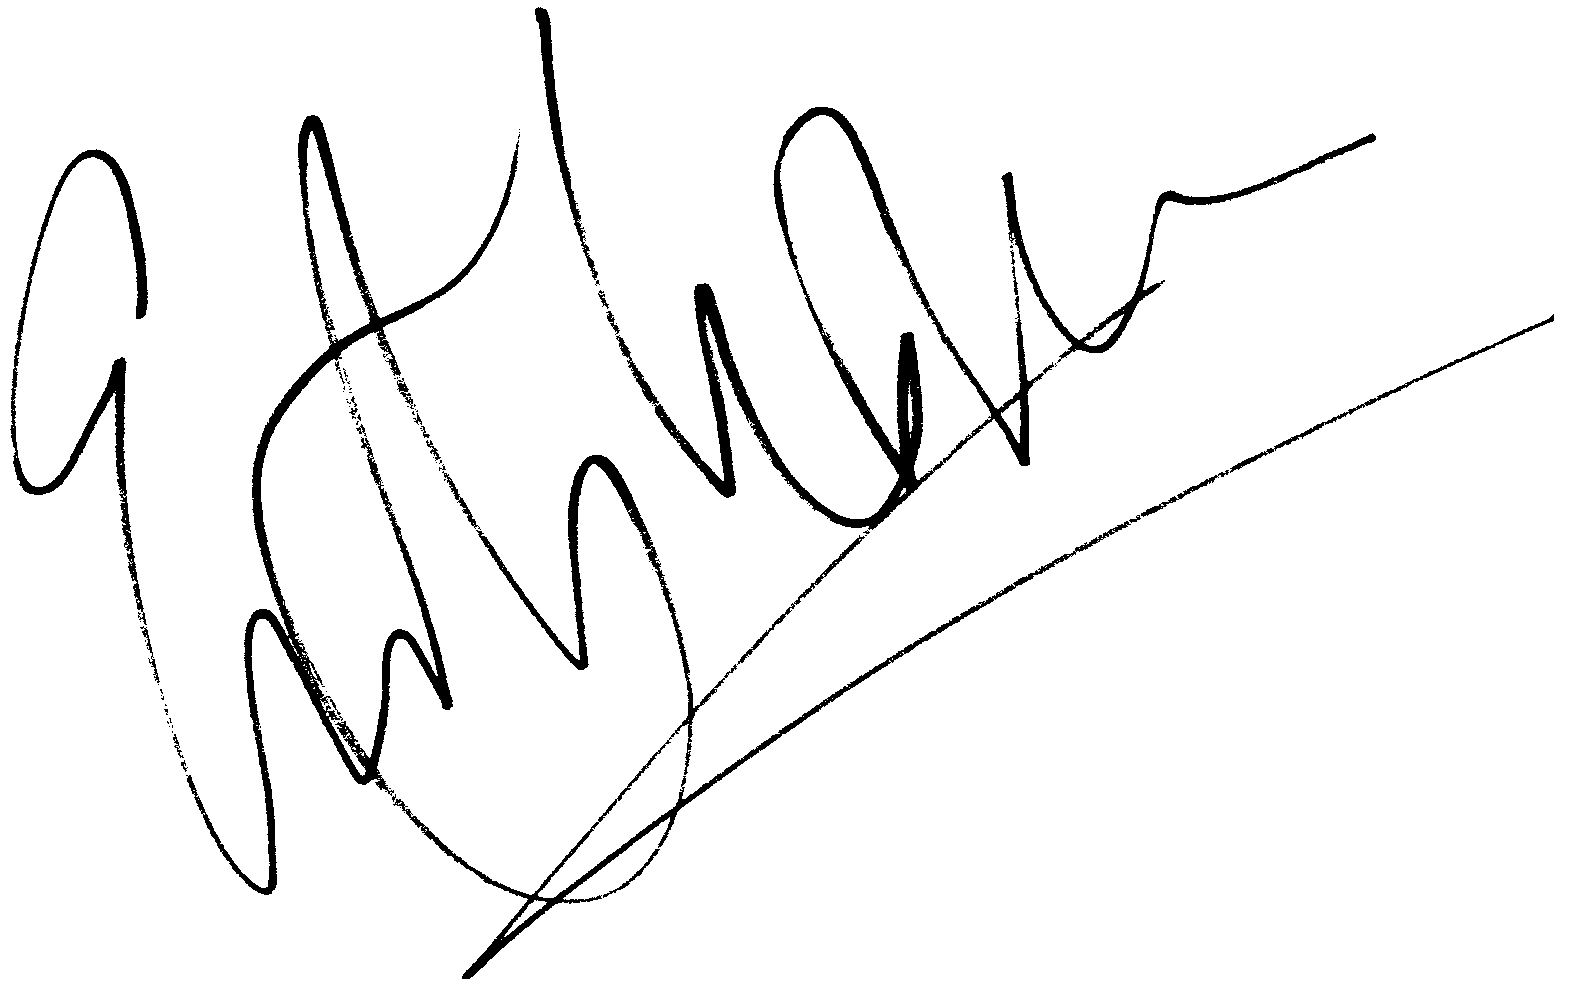 Emily Watson autograph facsimile